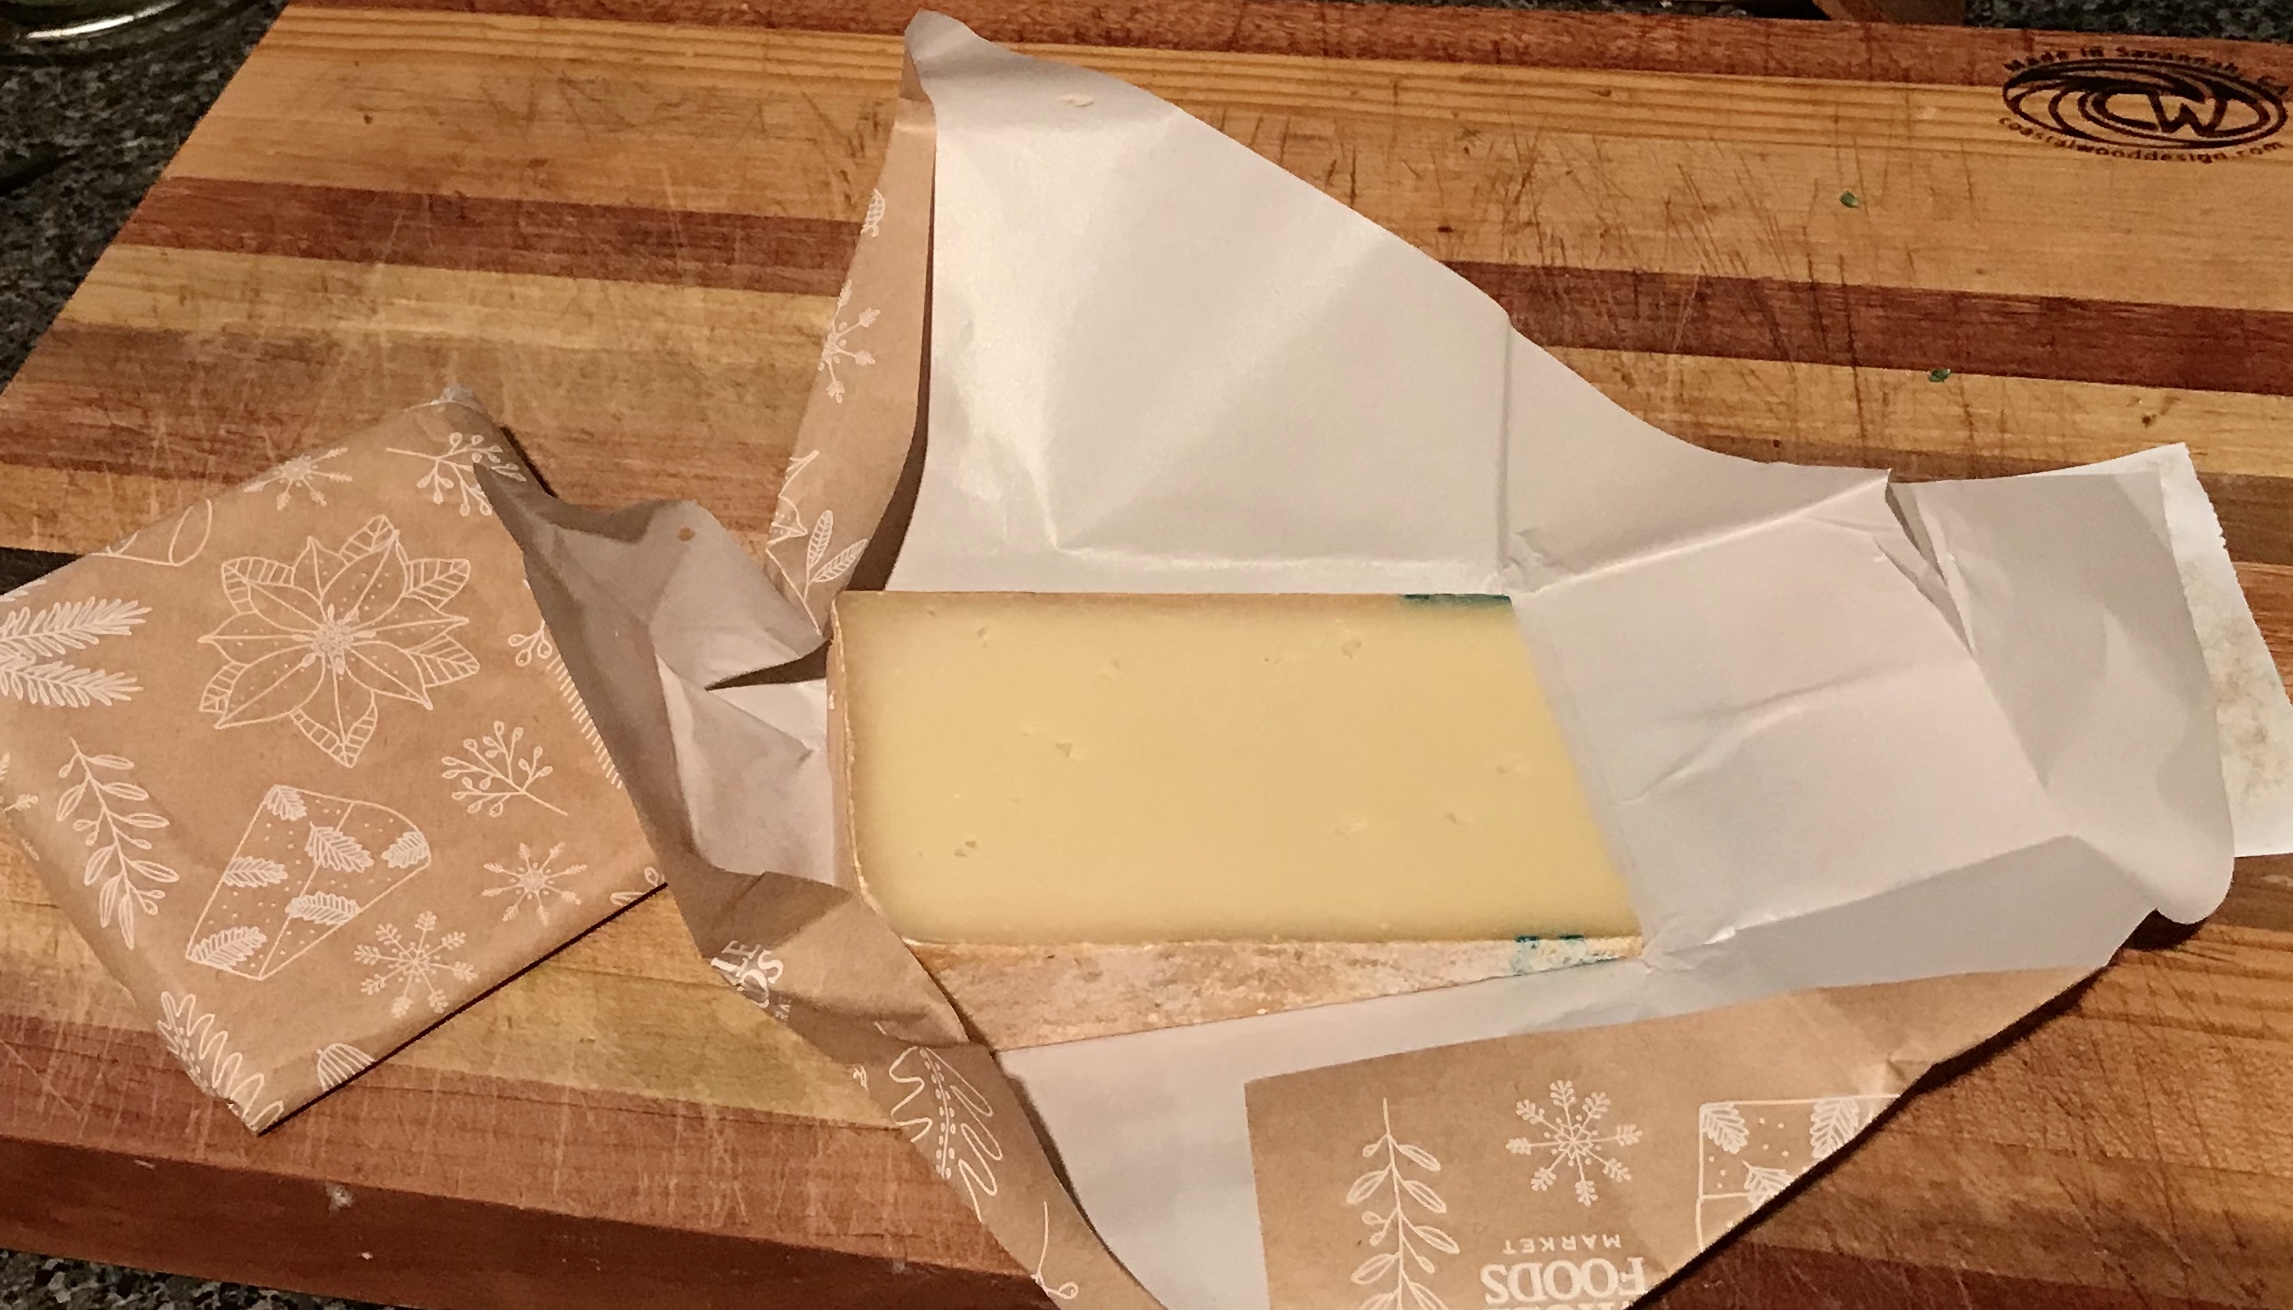 How to Buy Cheese Zero Waste